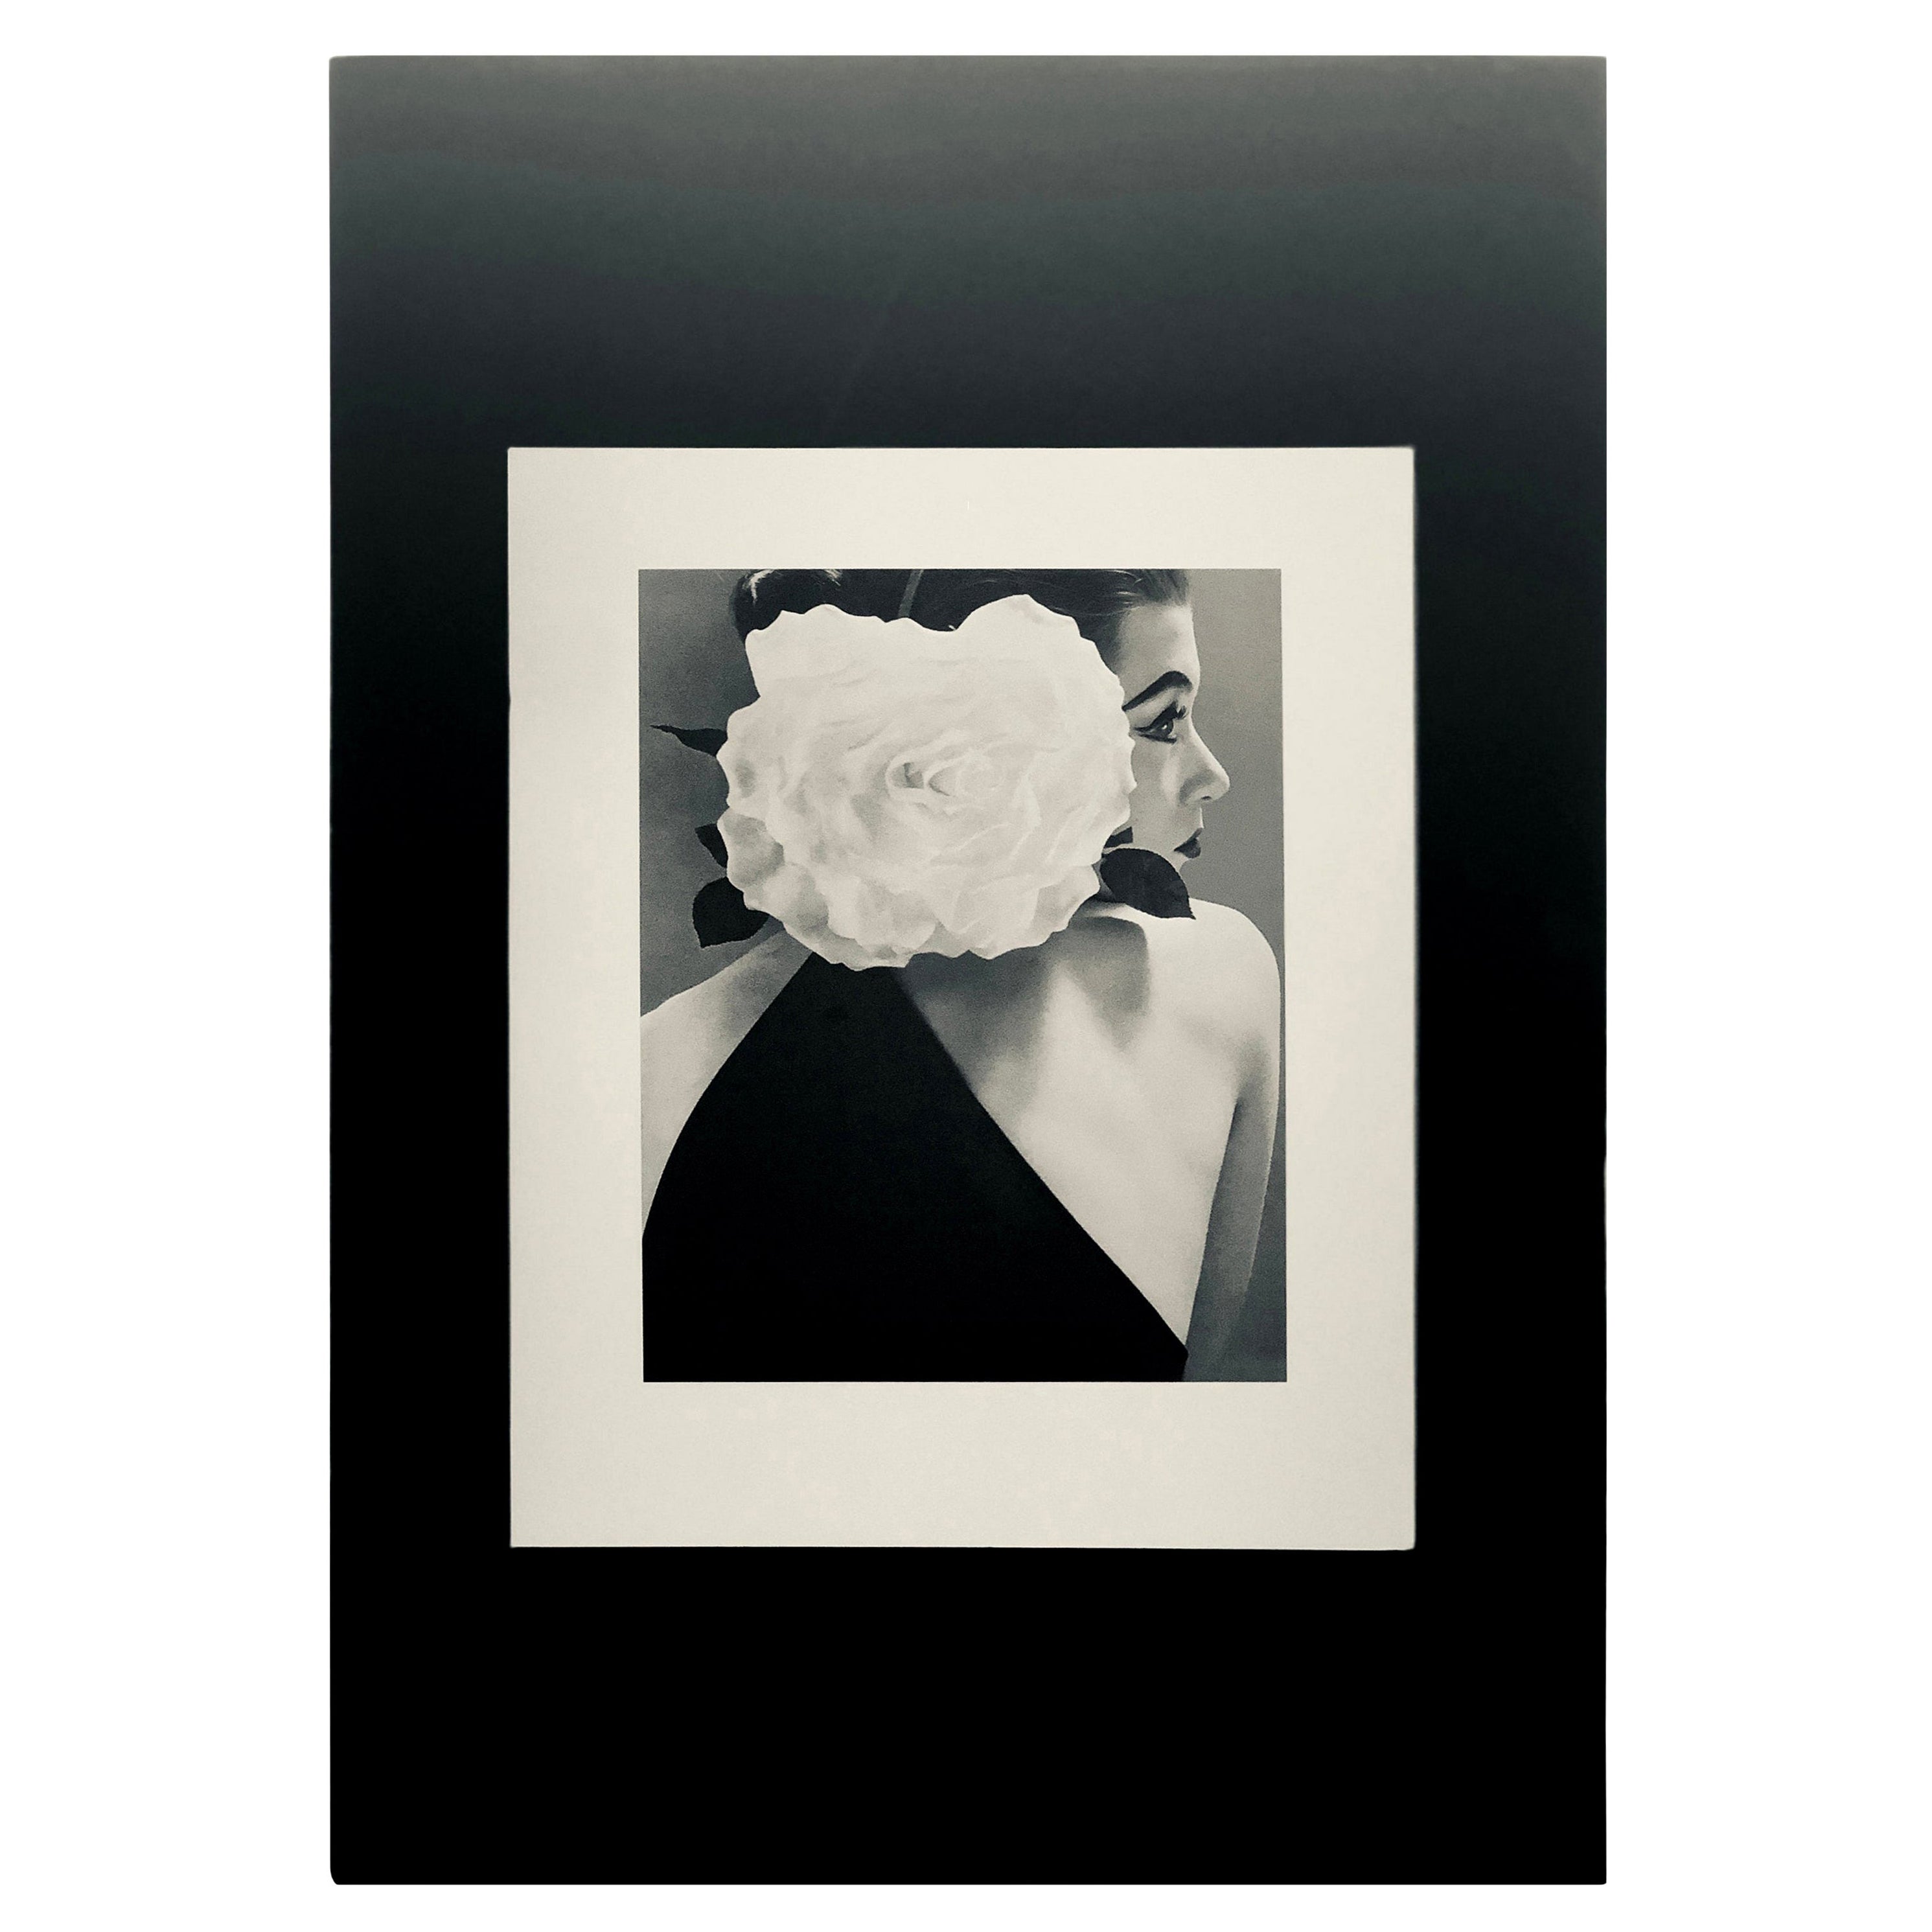 Black and White Photo by Richard Avedon “Barbara Mullen” 1951 Sheet-Fed Gravure For Sale